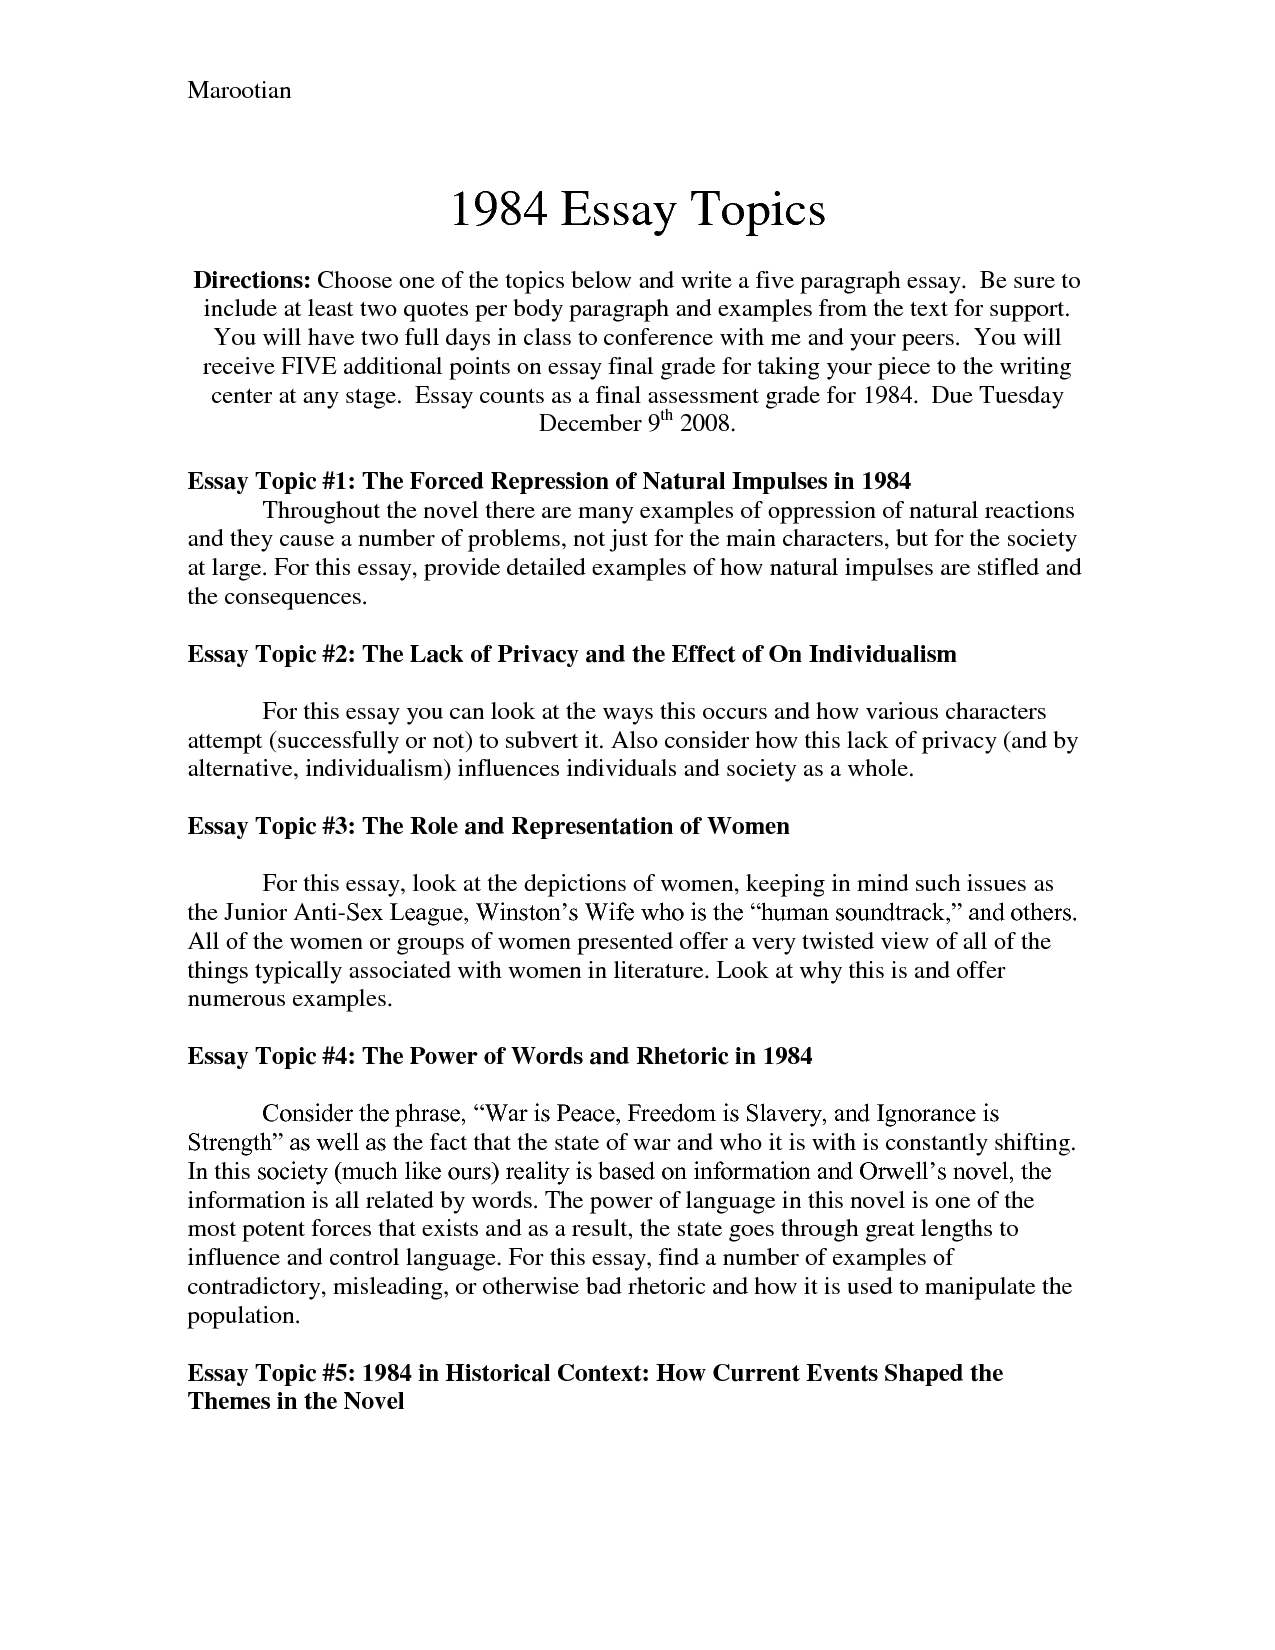 Ap Biology 2008 Essay Answers